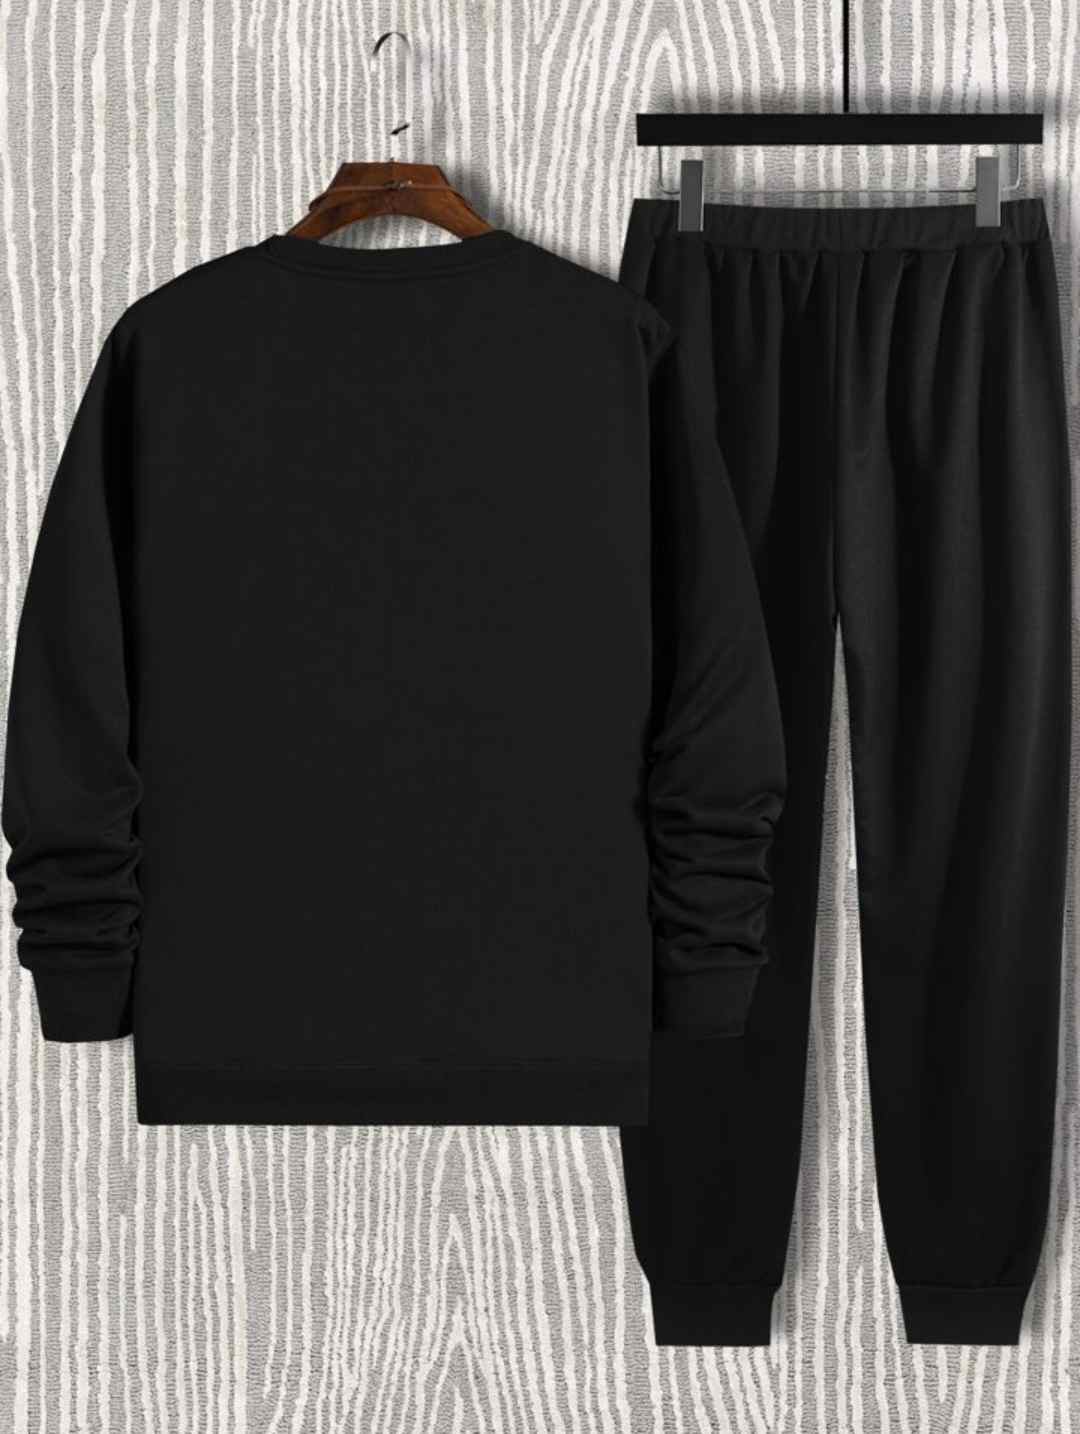 Mens Sweatshirt and Pants Set by Tee Tall - MSPSTT12 - Black Black